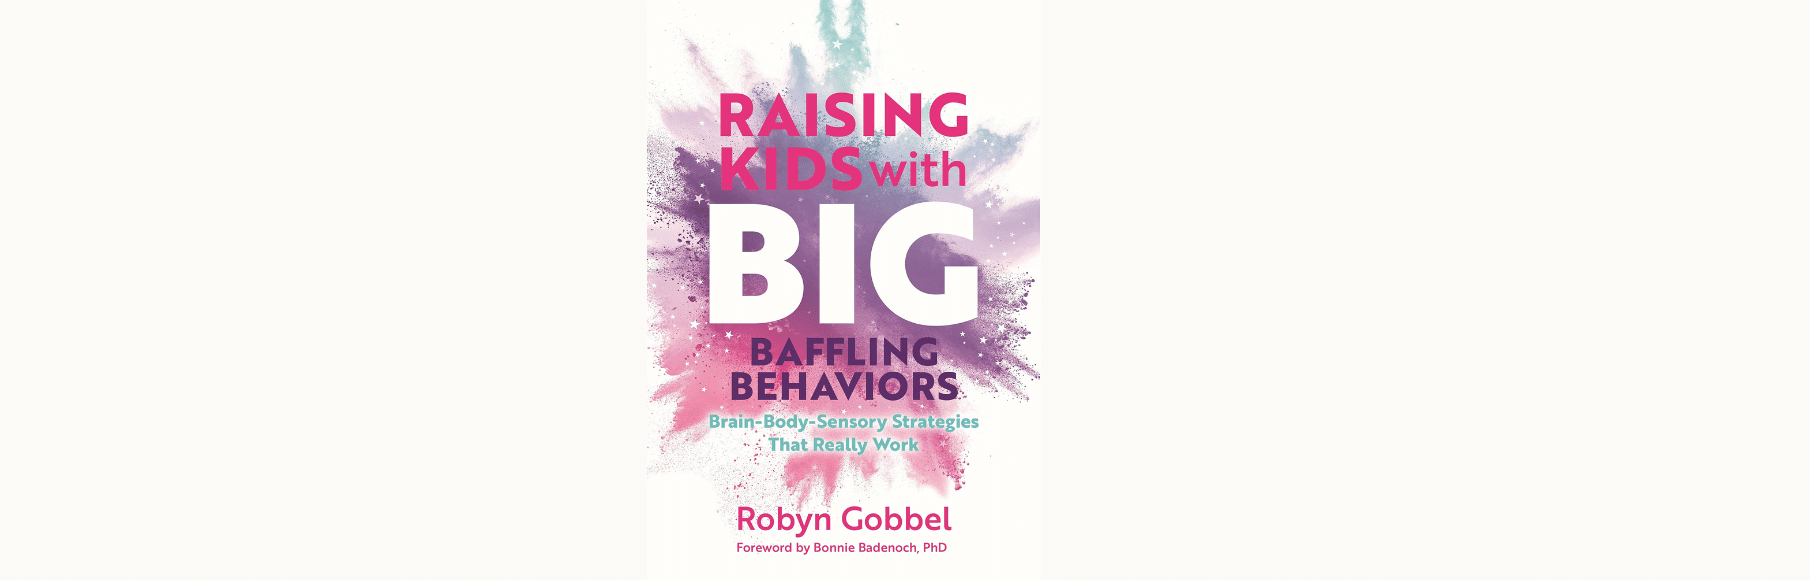 Raising Kids with Big Baffling Behavior Book Cover